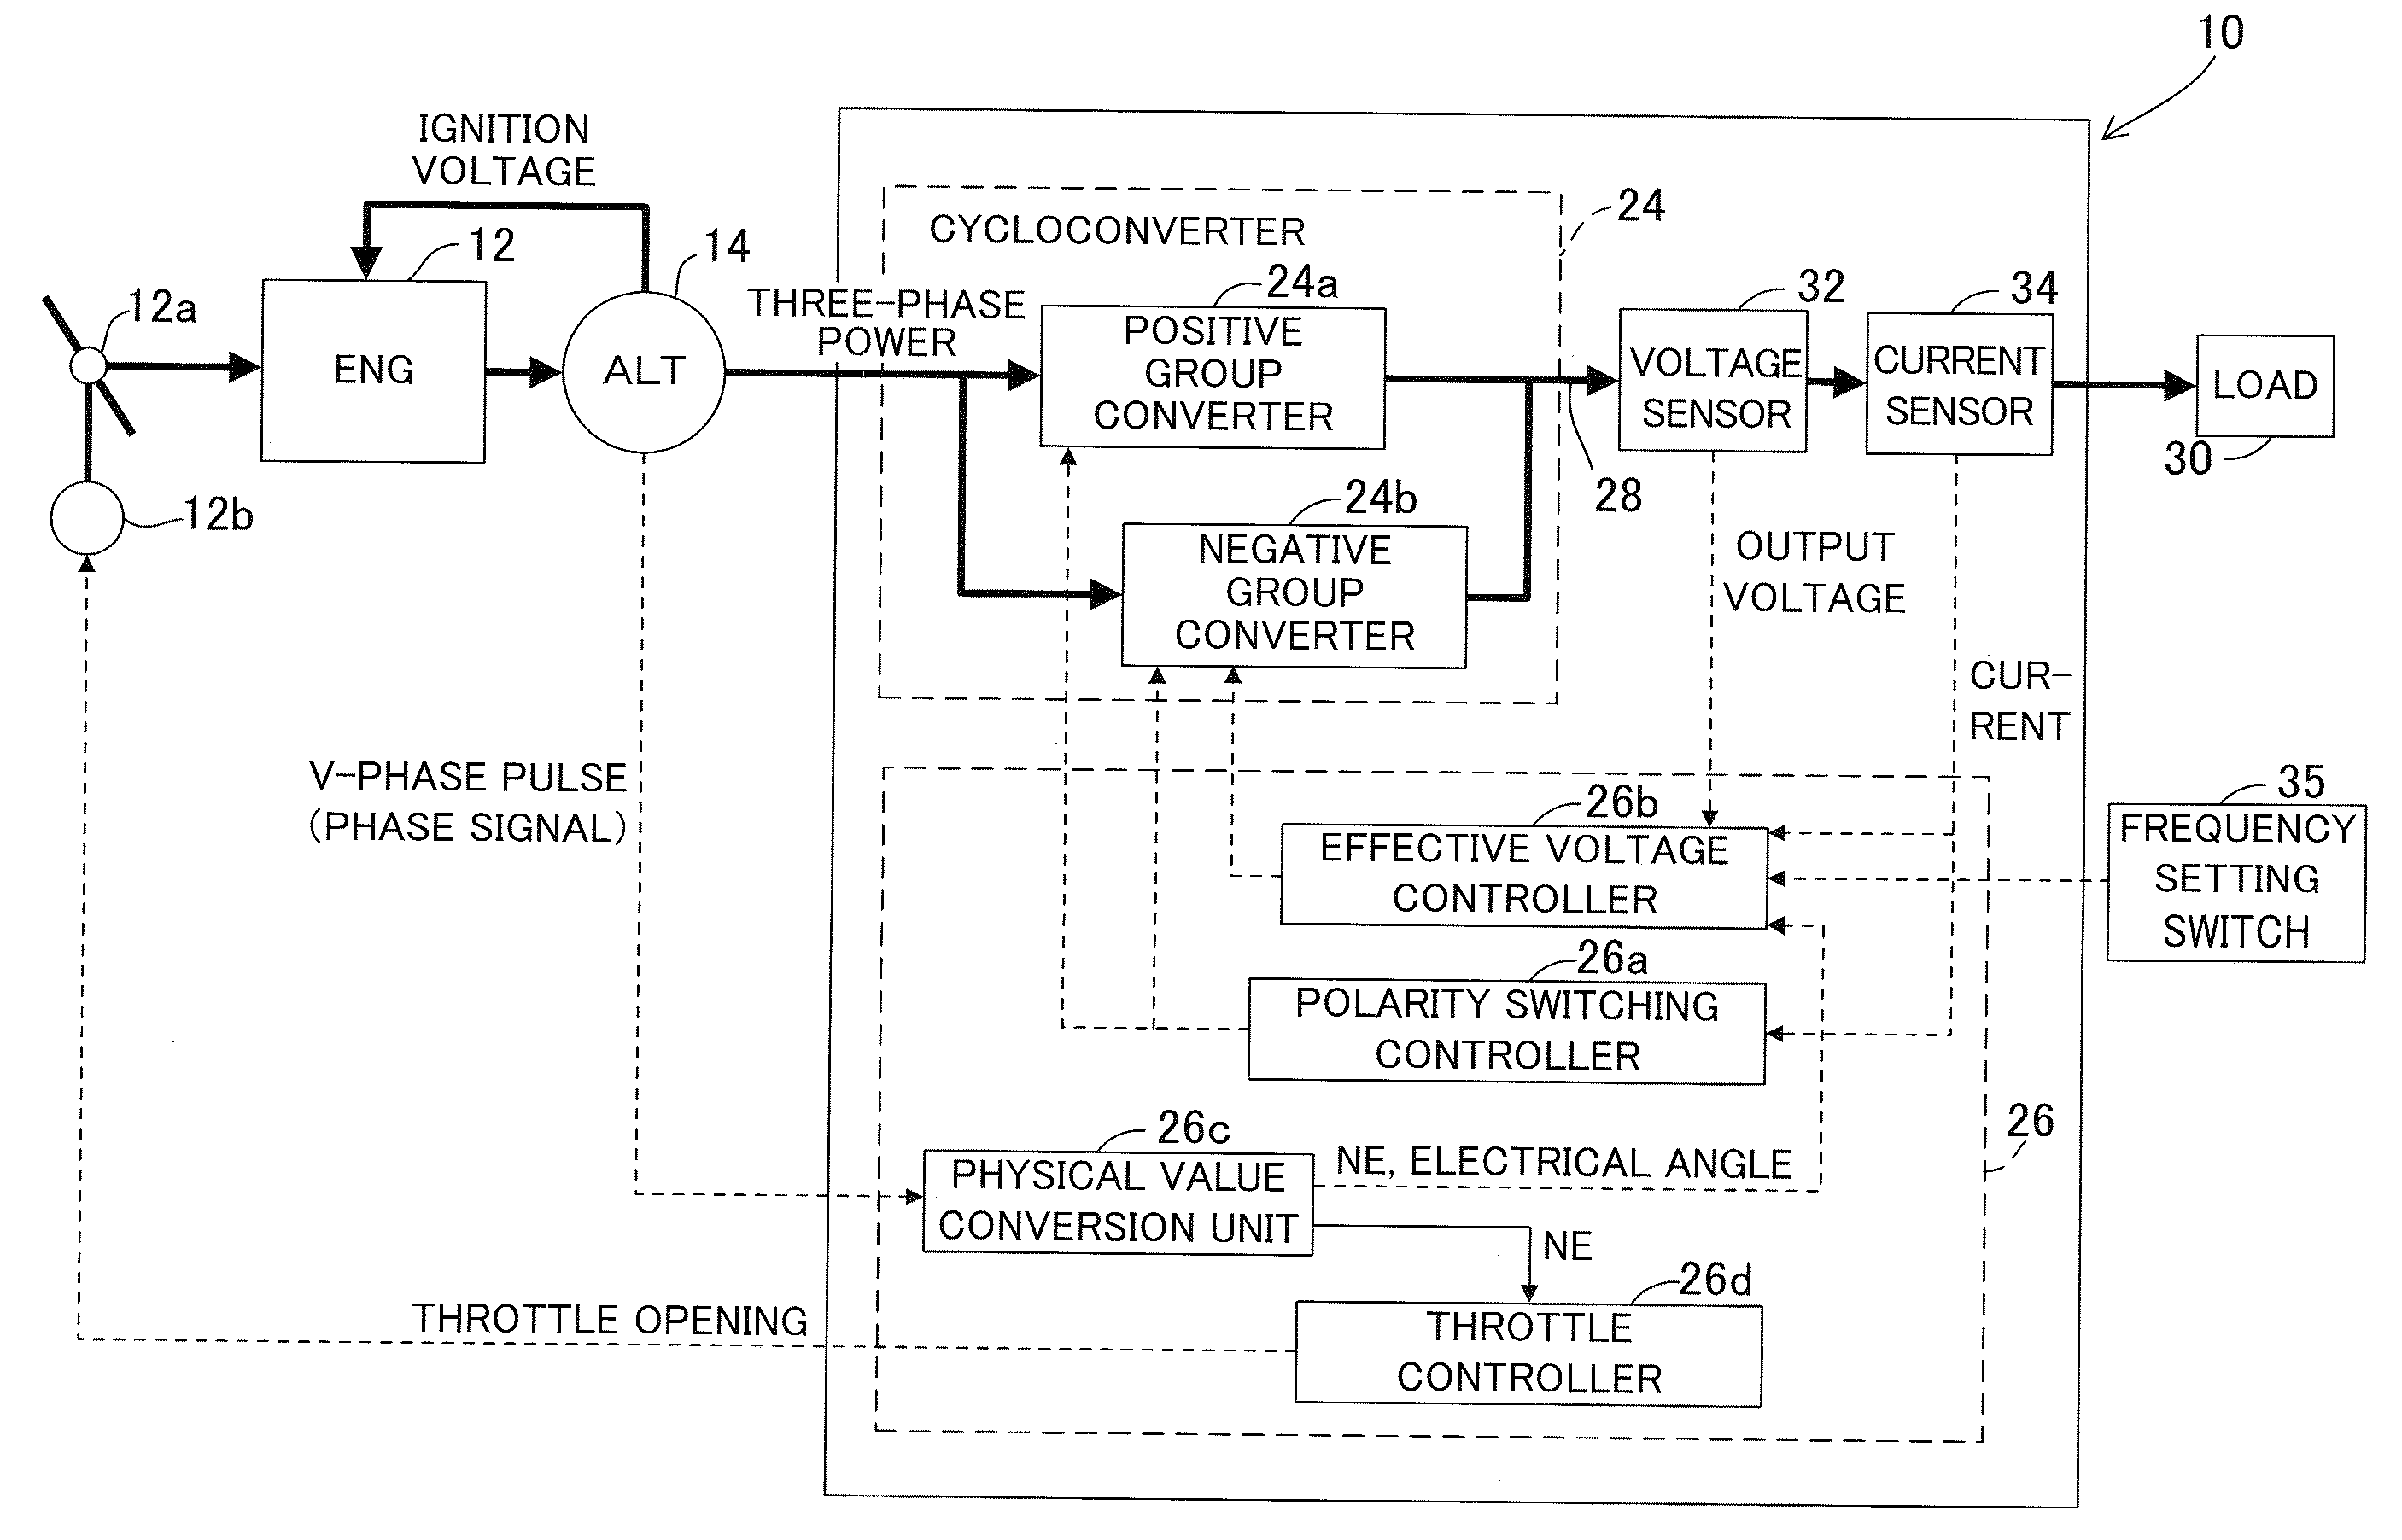 Cycloconverter generator